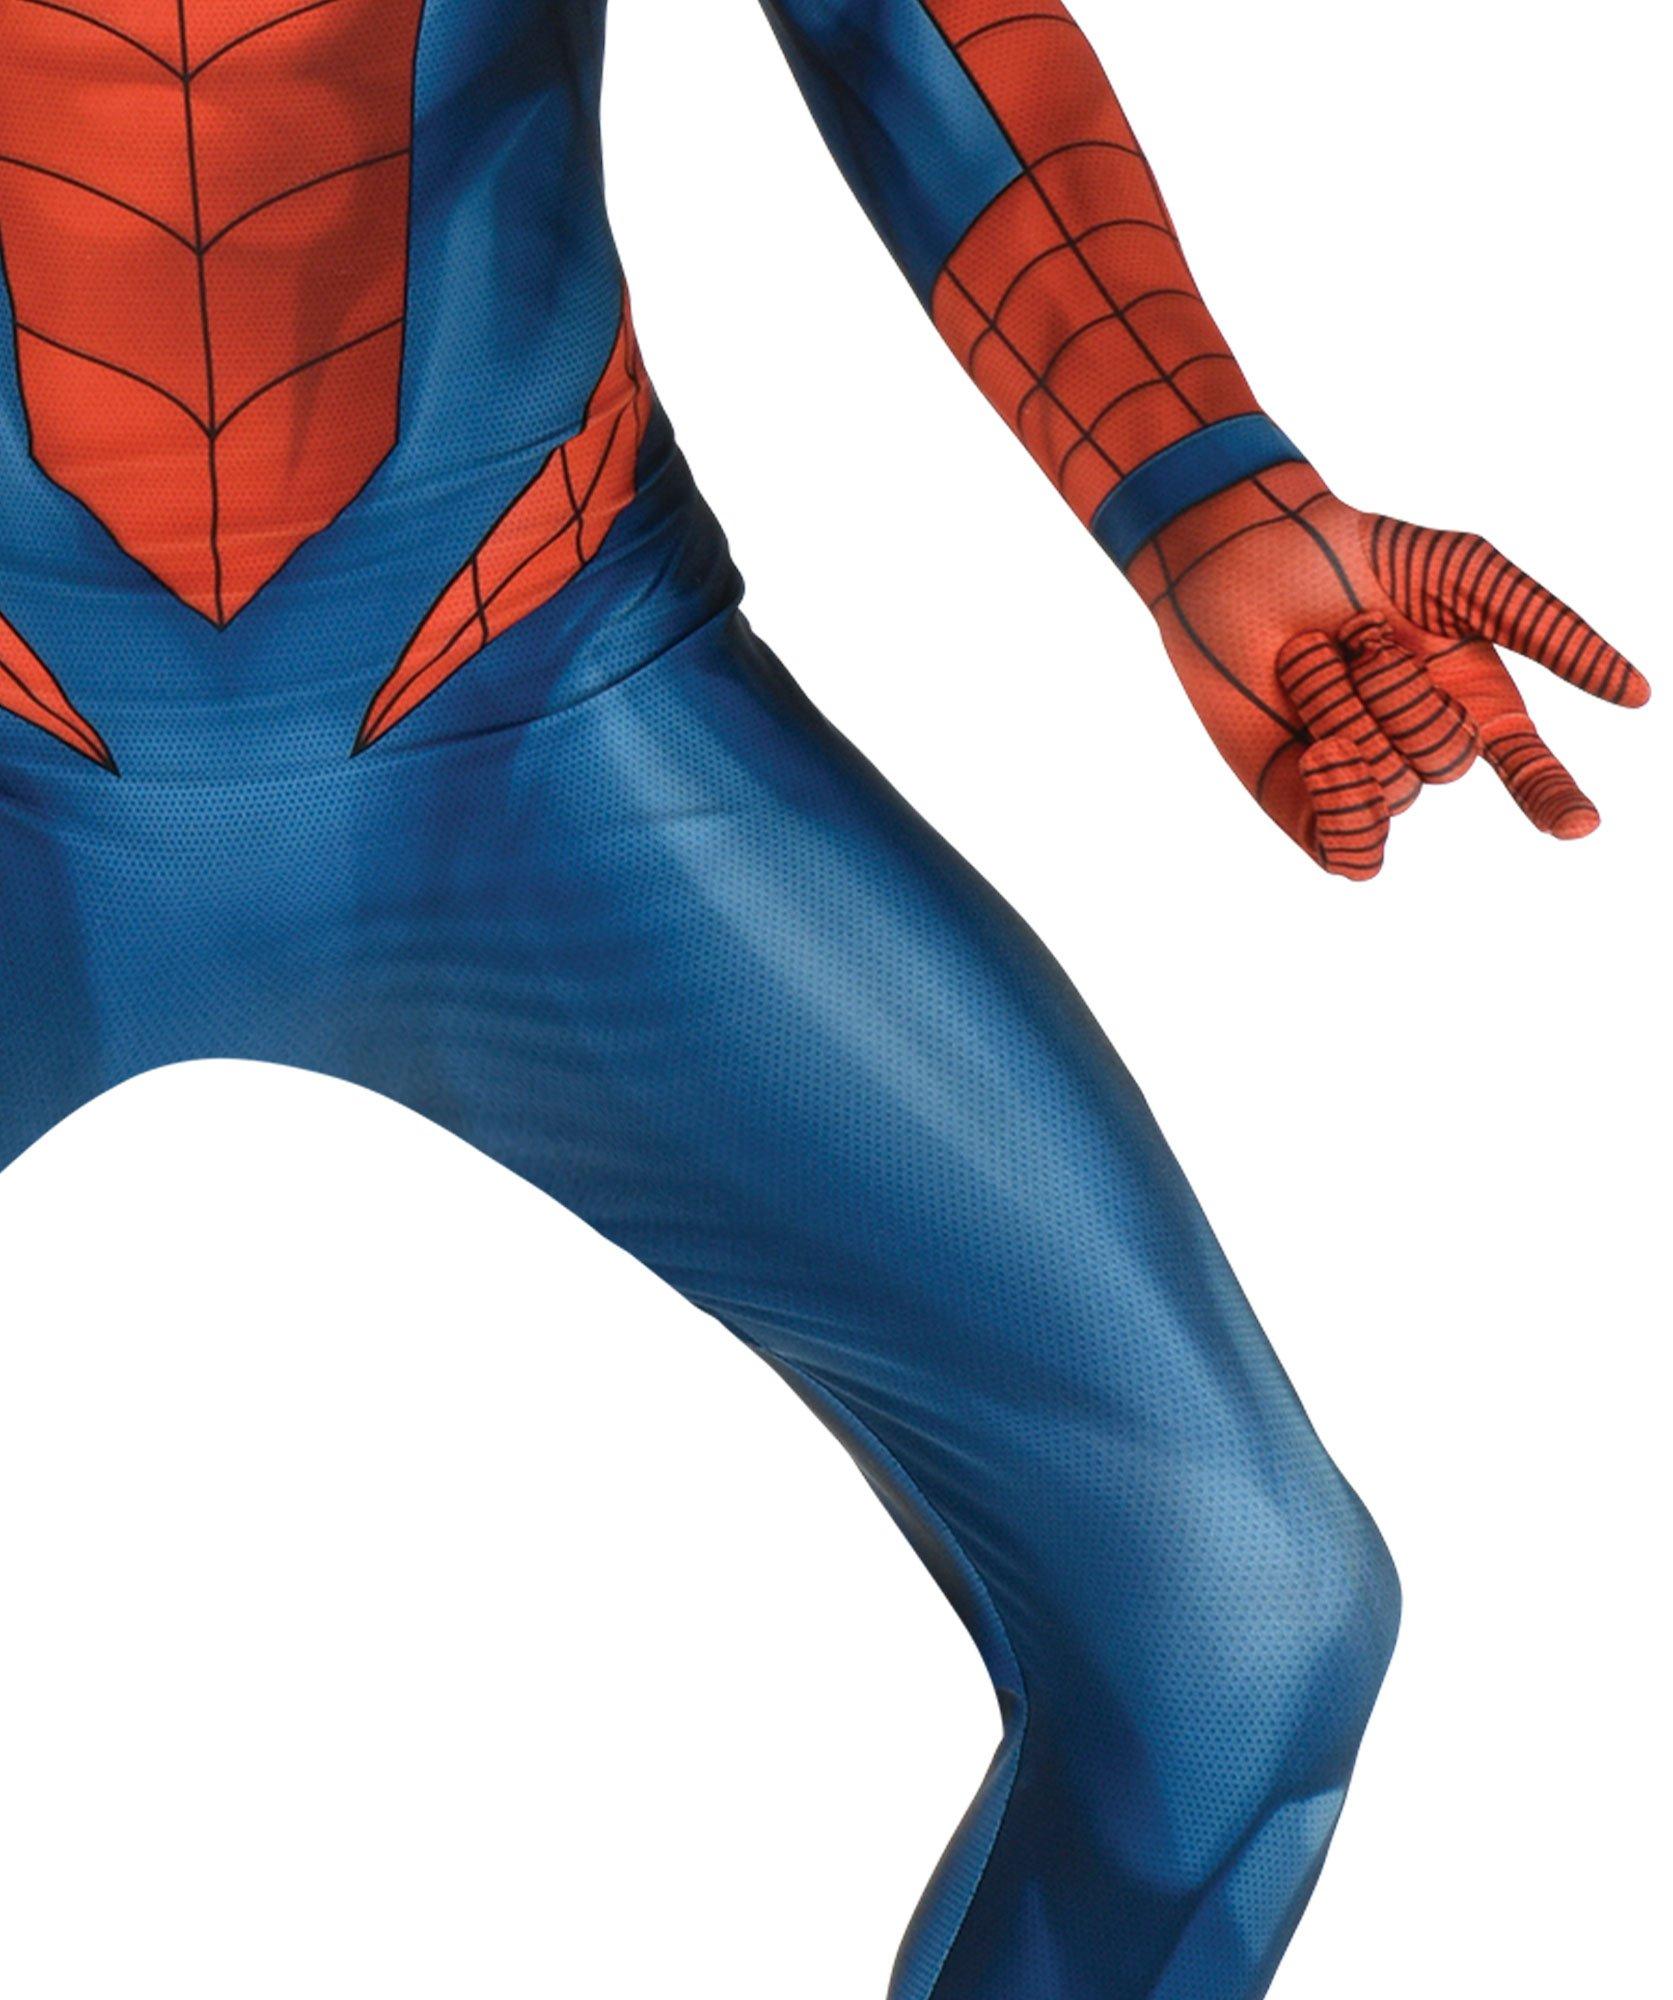 Costume Spiderman adulte PS4 - Spider Shop